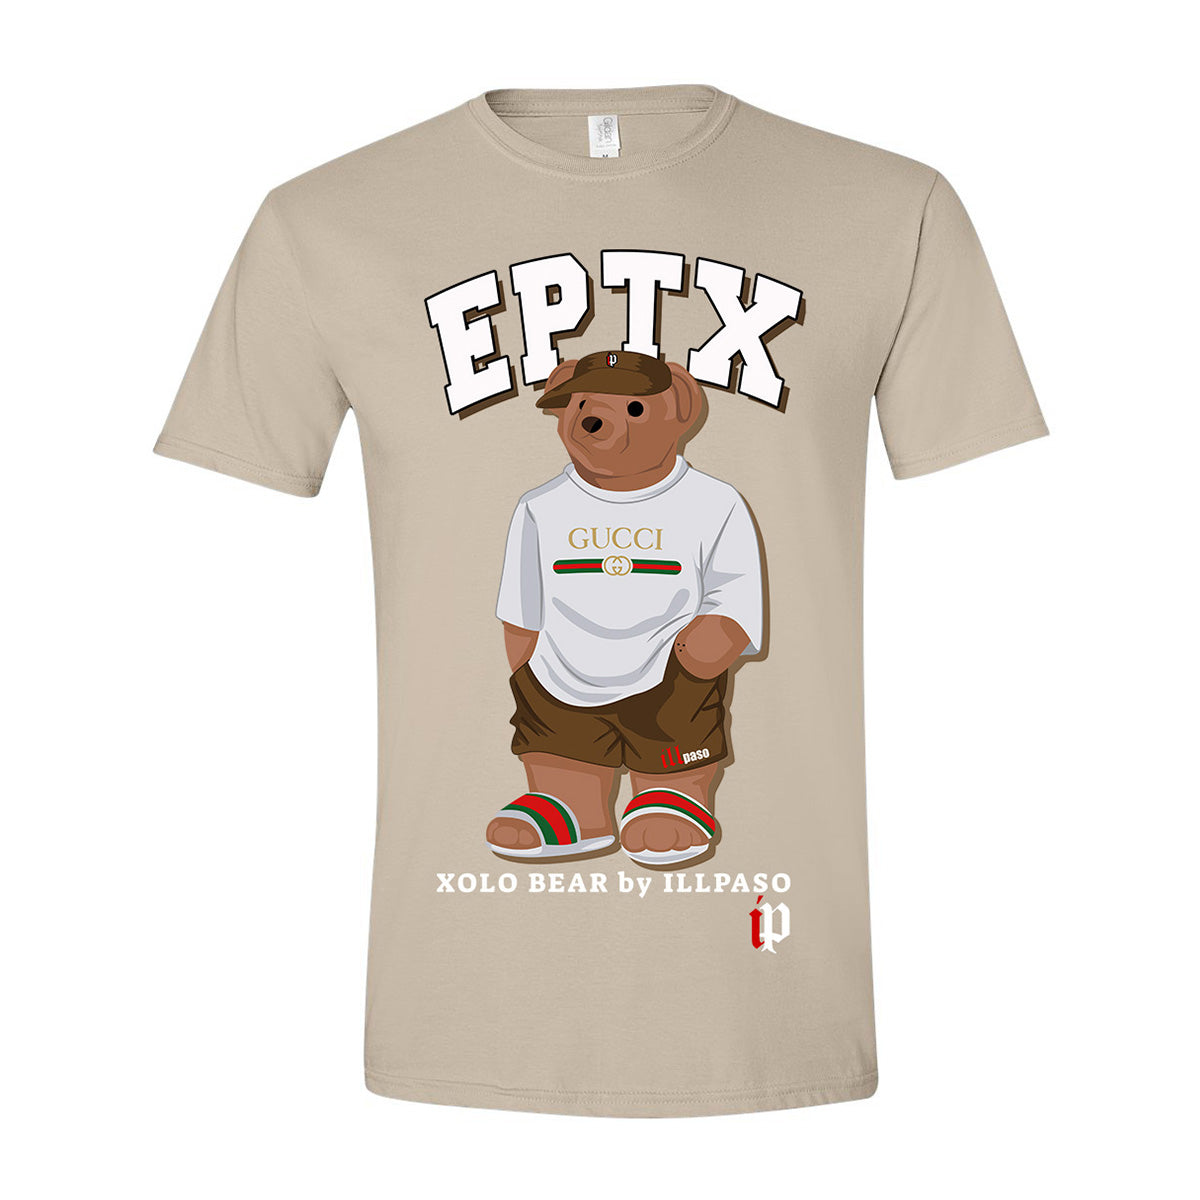 EPTX "Xolo Bear" Unisex T-shirt by illpaso